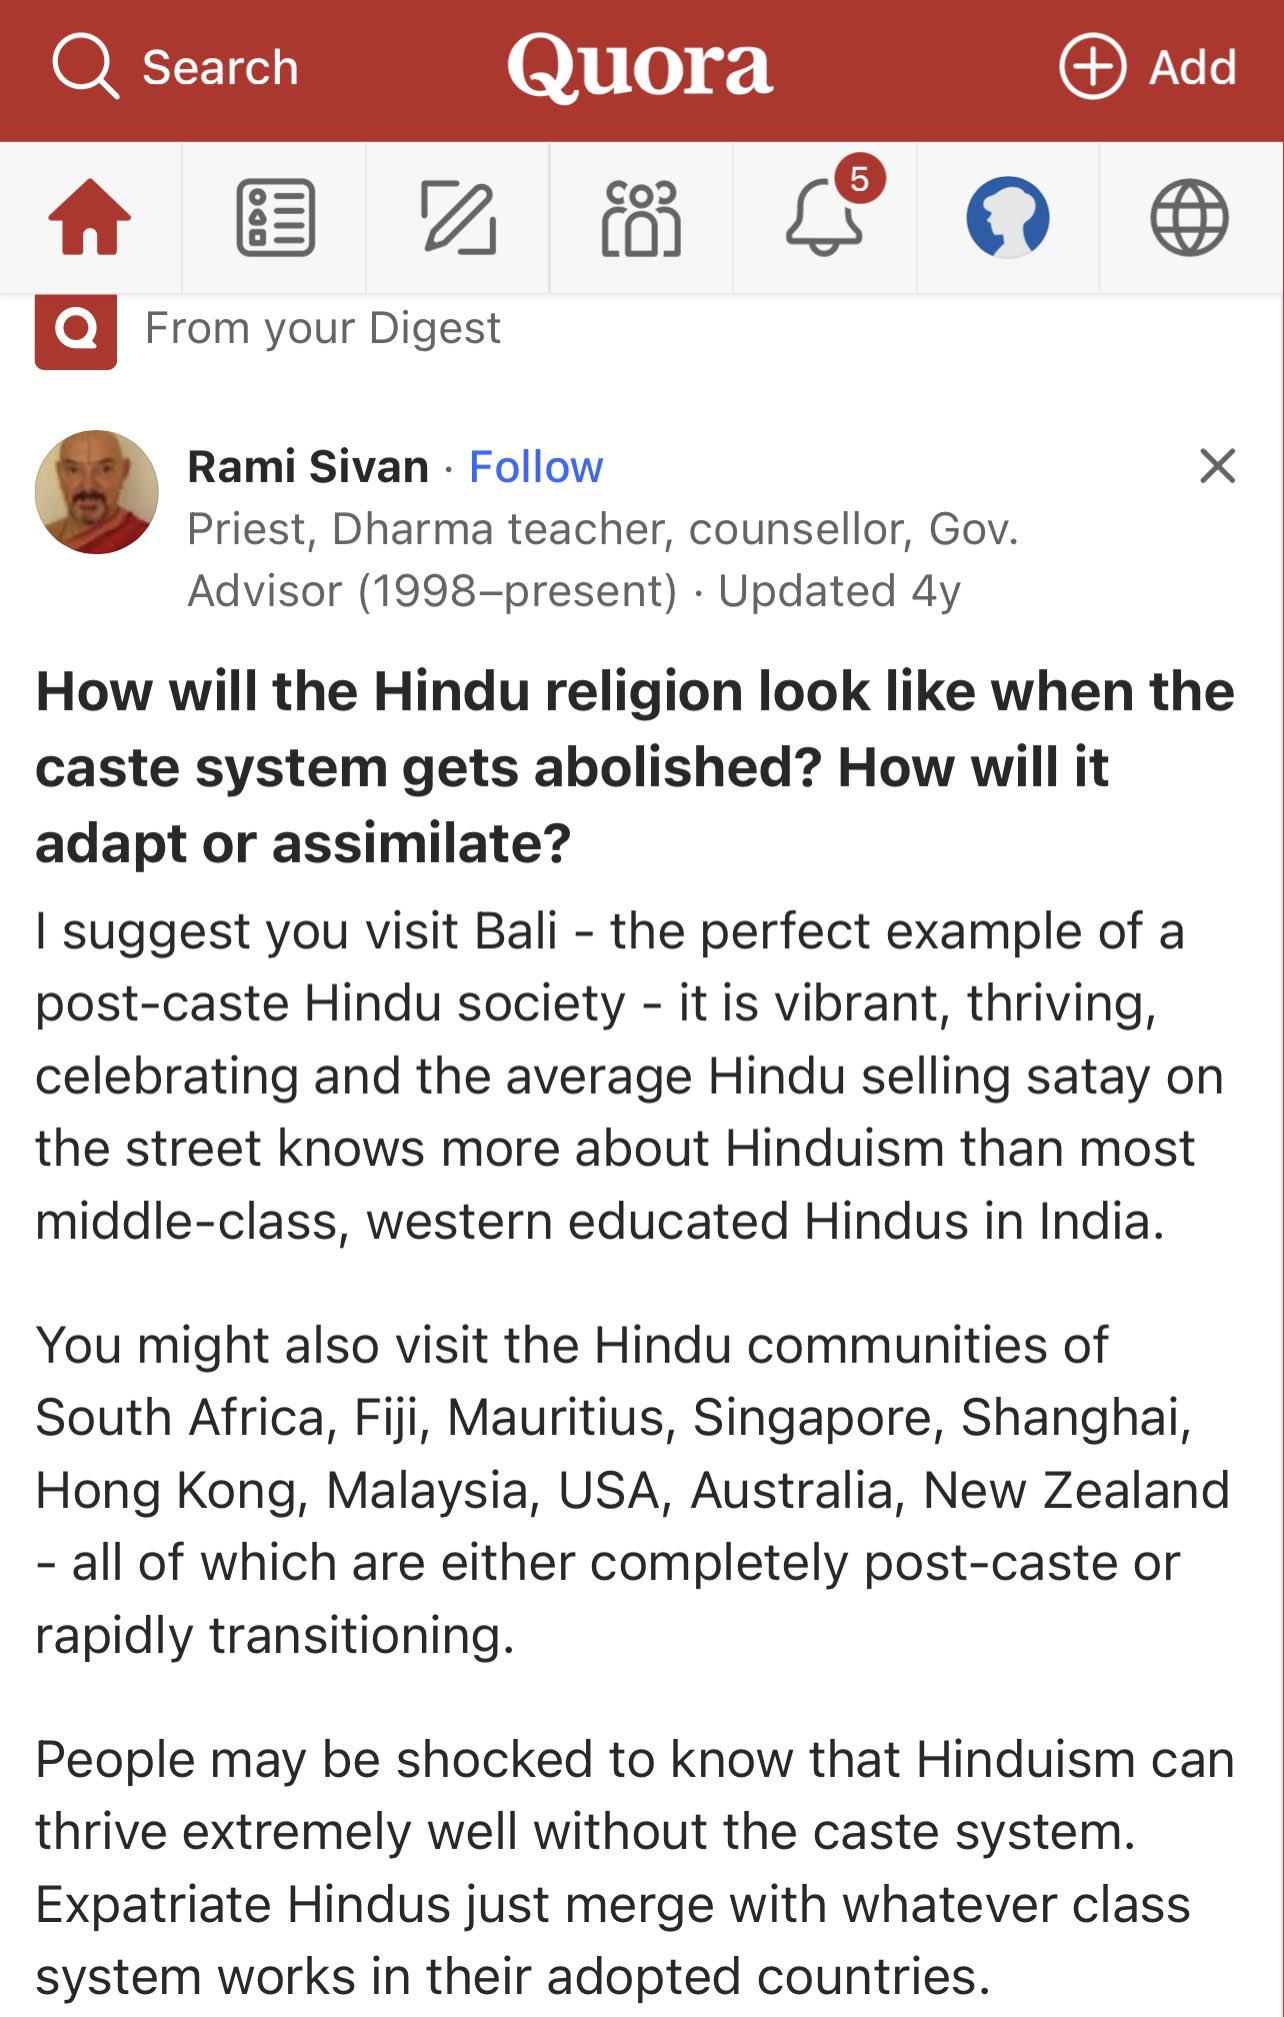 Rami Sivan on Hinduism